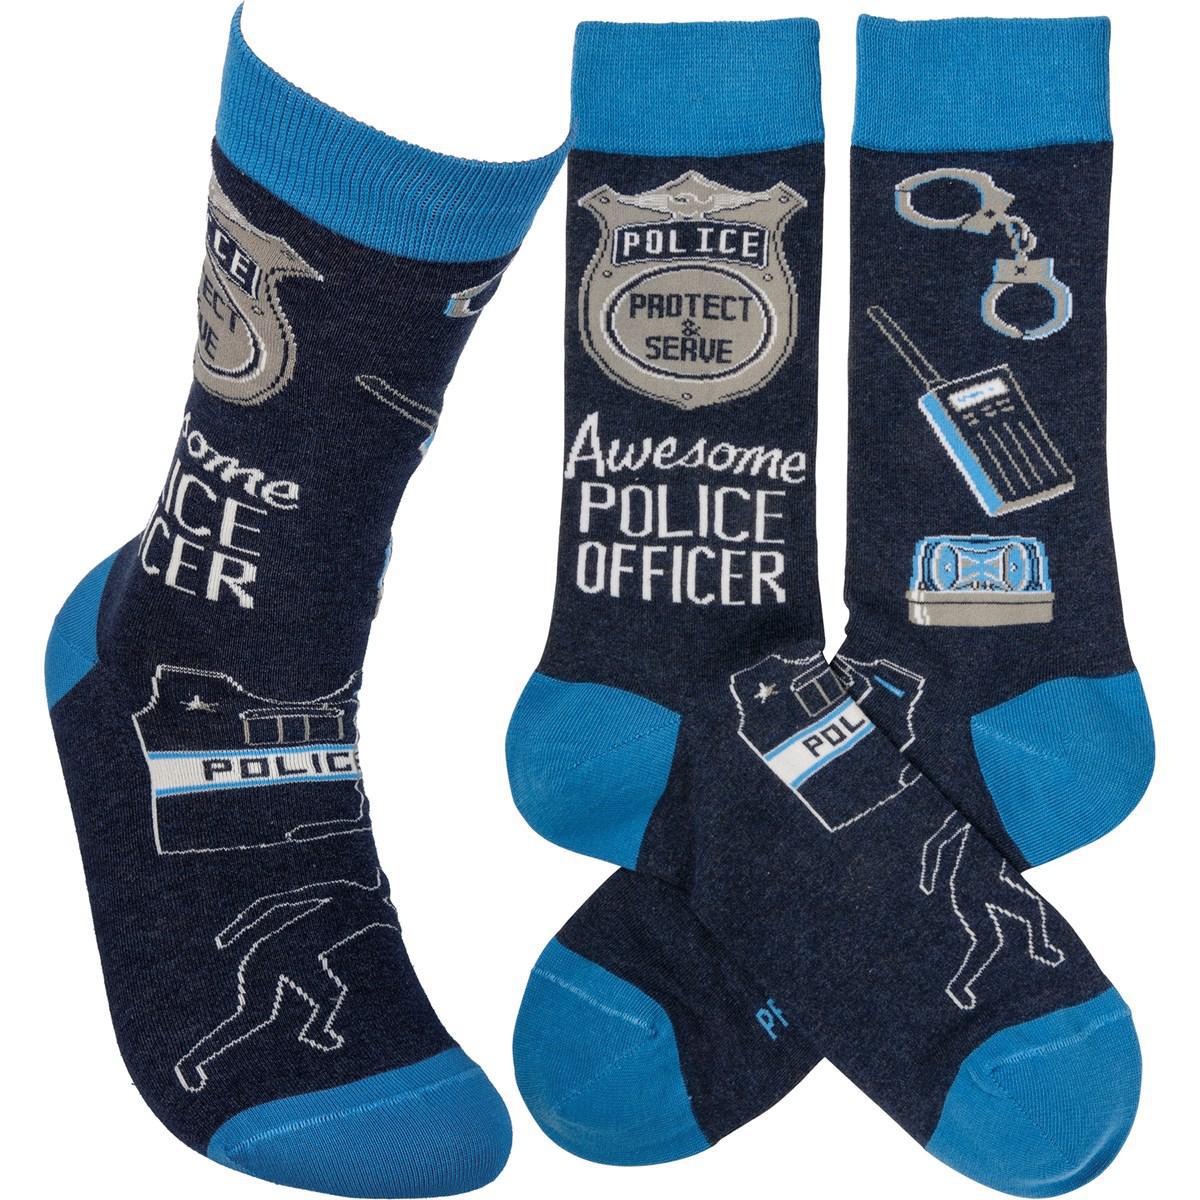 Awesome Police Officer Socks